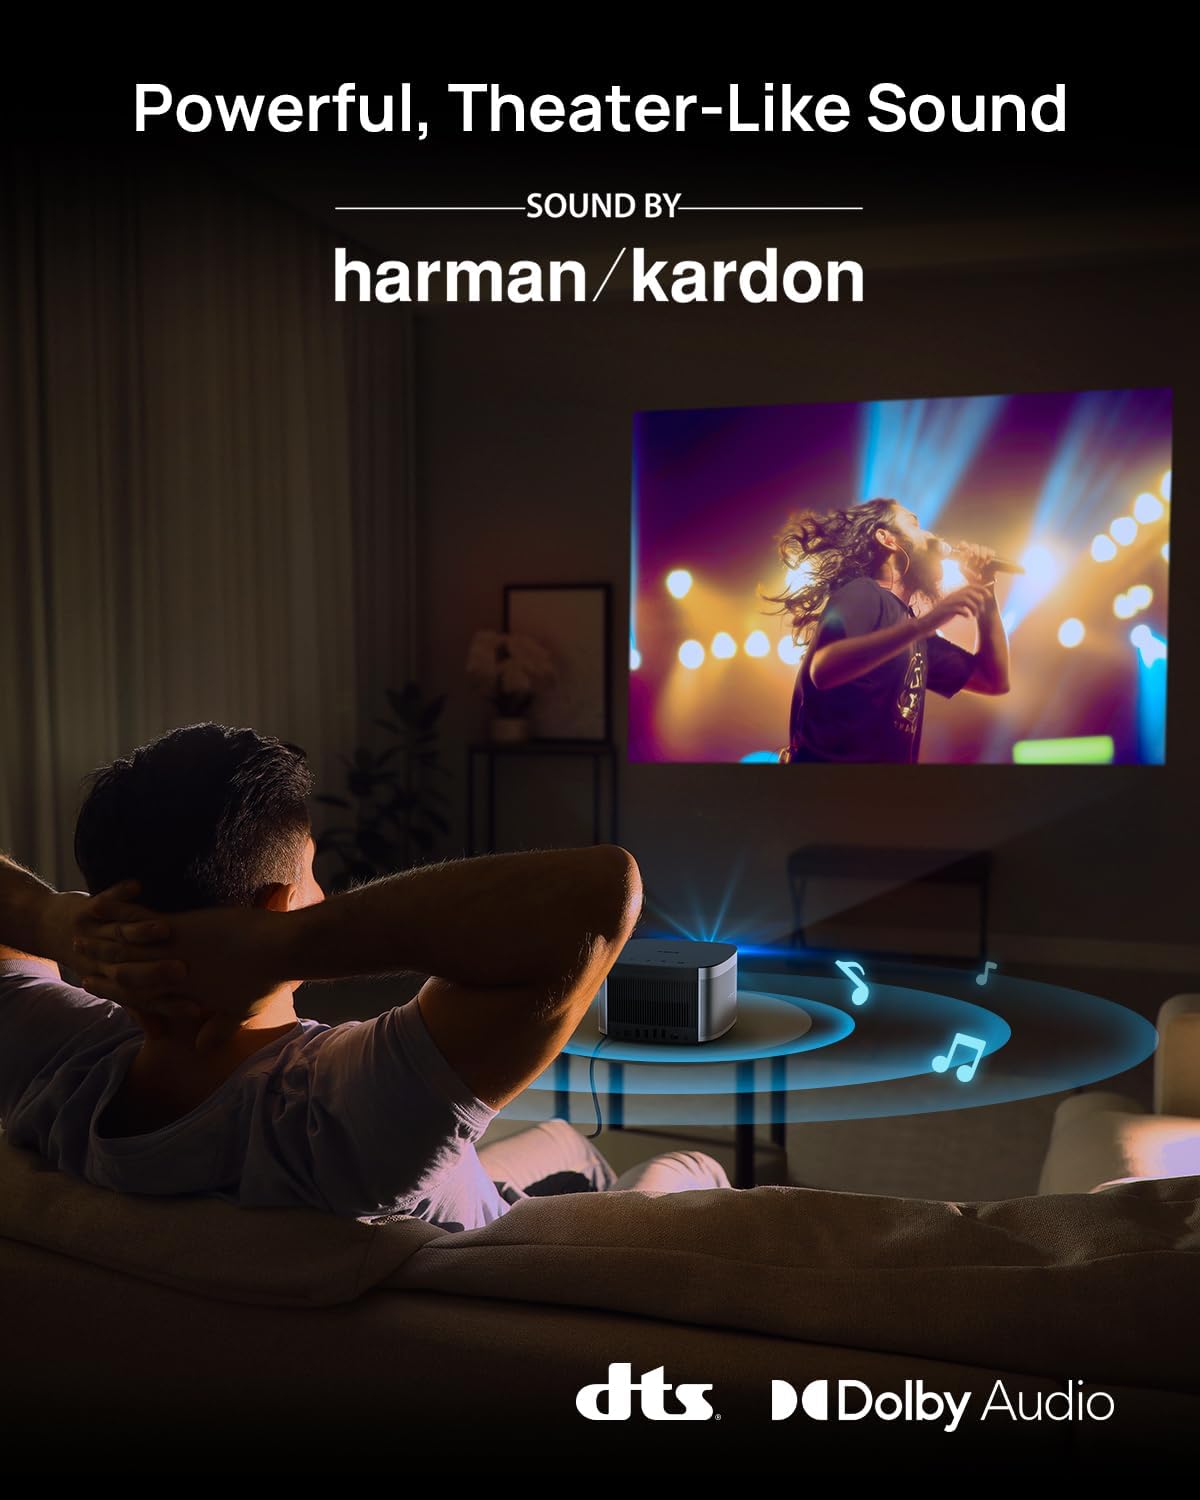 XGIMI HORIZON 1080p FHD Projector 4K Supported Movie Projector, 1500 ISO Lumens, Harman Kardon Speakers, Android TV 10.0, Auto Focus, Auto Keystone Correction, Auto Object Avoidance, WiFi Bluetooth